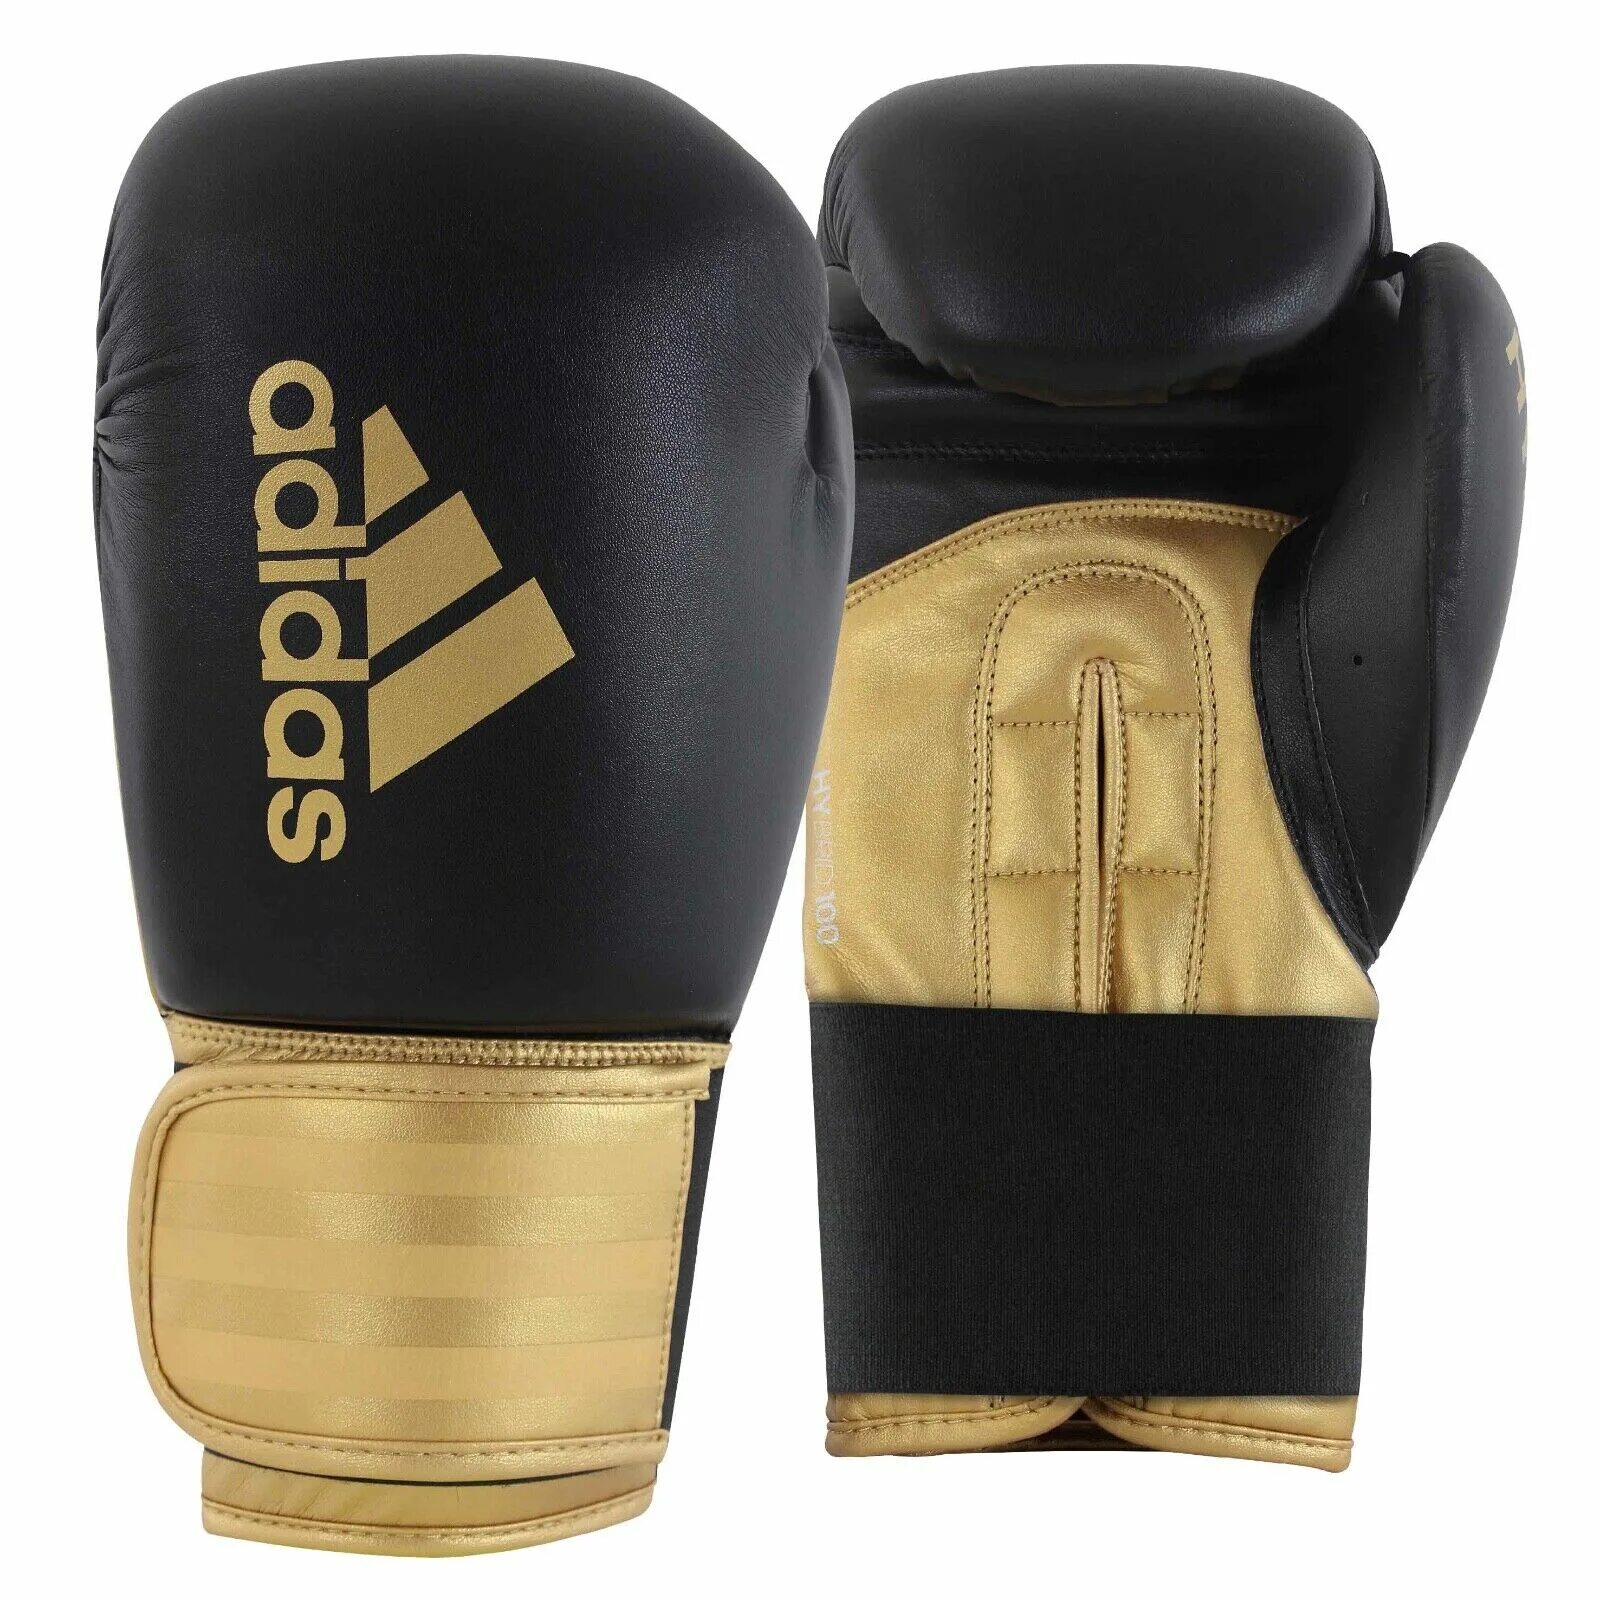 Боксерские перчатки adidas Hybrid 200 Dynamic Fit. Адидас гибрид 100. Adidas Hybrid 100 черно золотые. Перчатки для бокса адидас. Hybrid 100